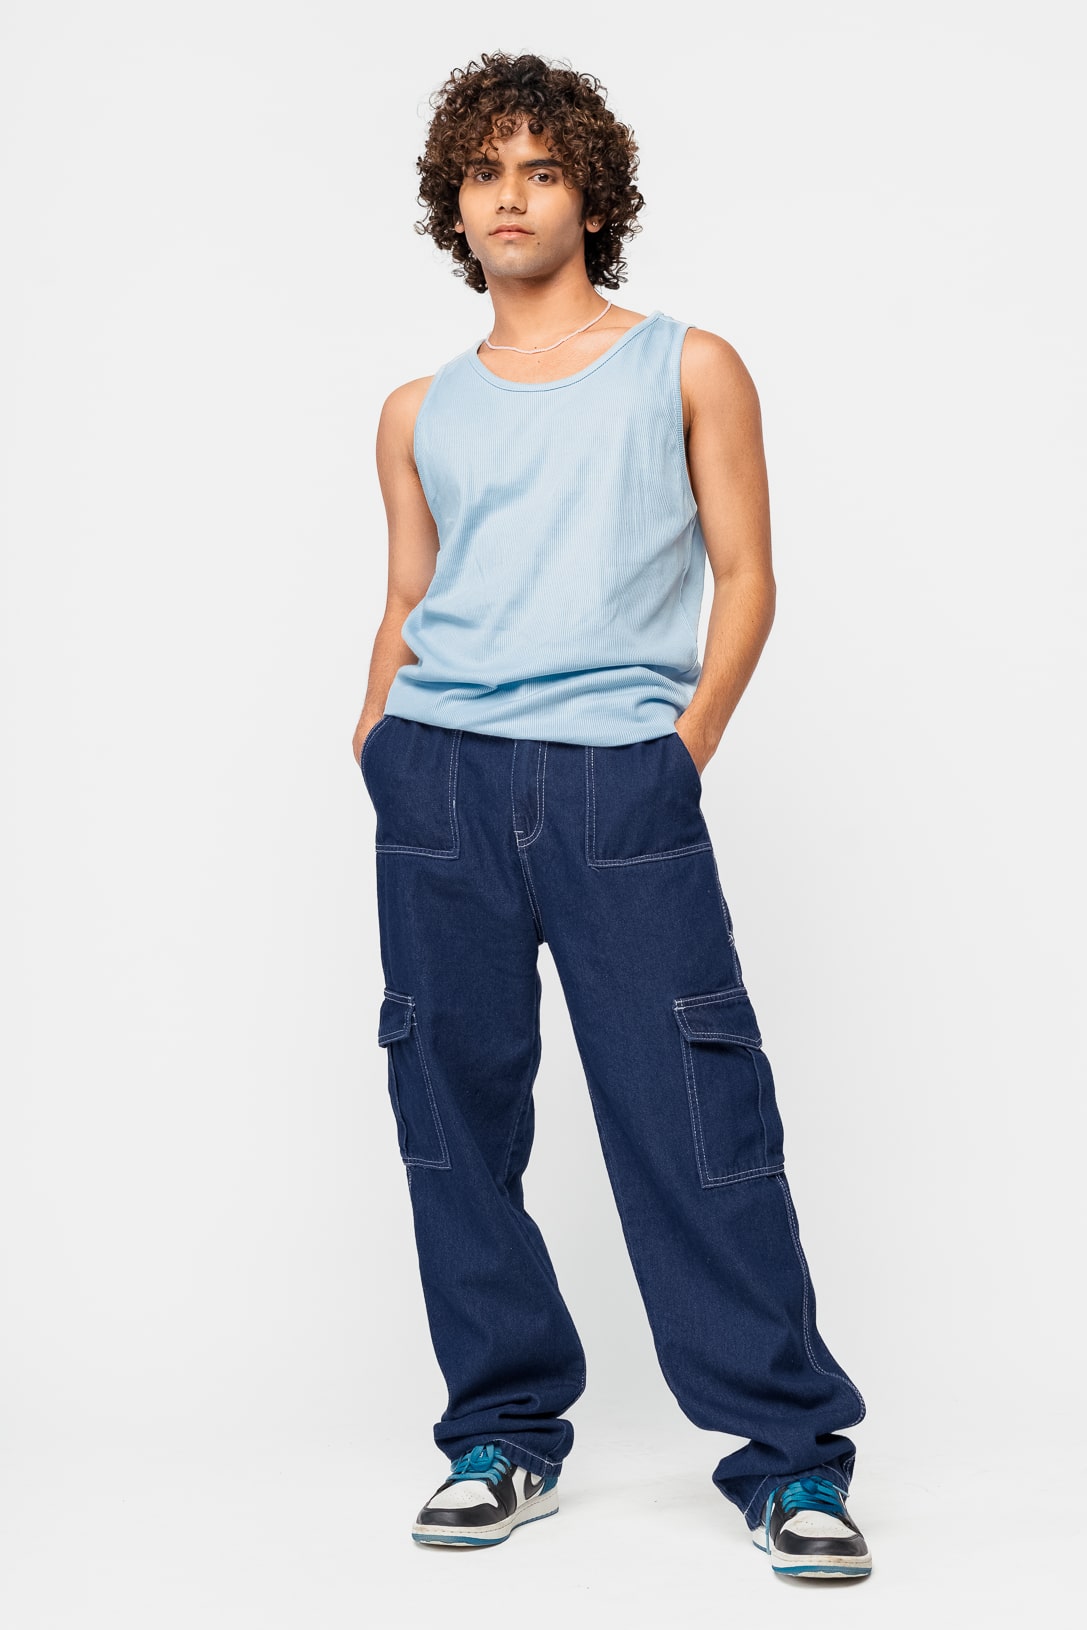 Faded Blue Draggon Jeans Pants Slim Fit